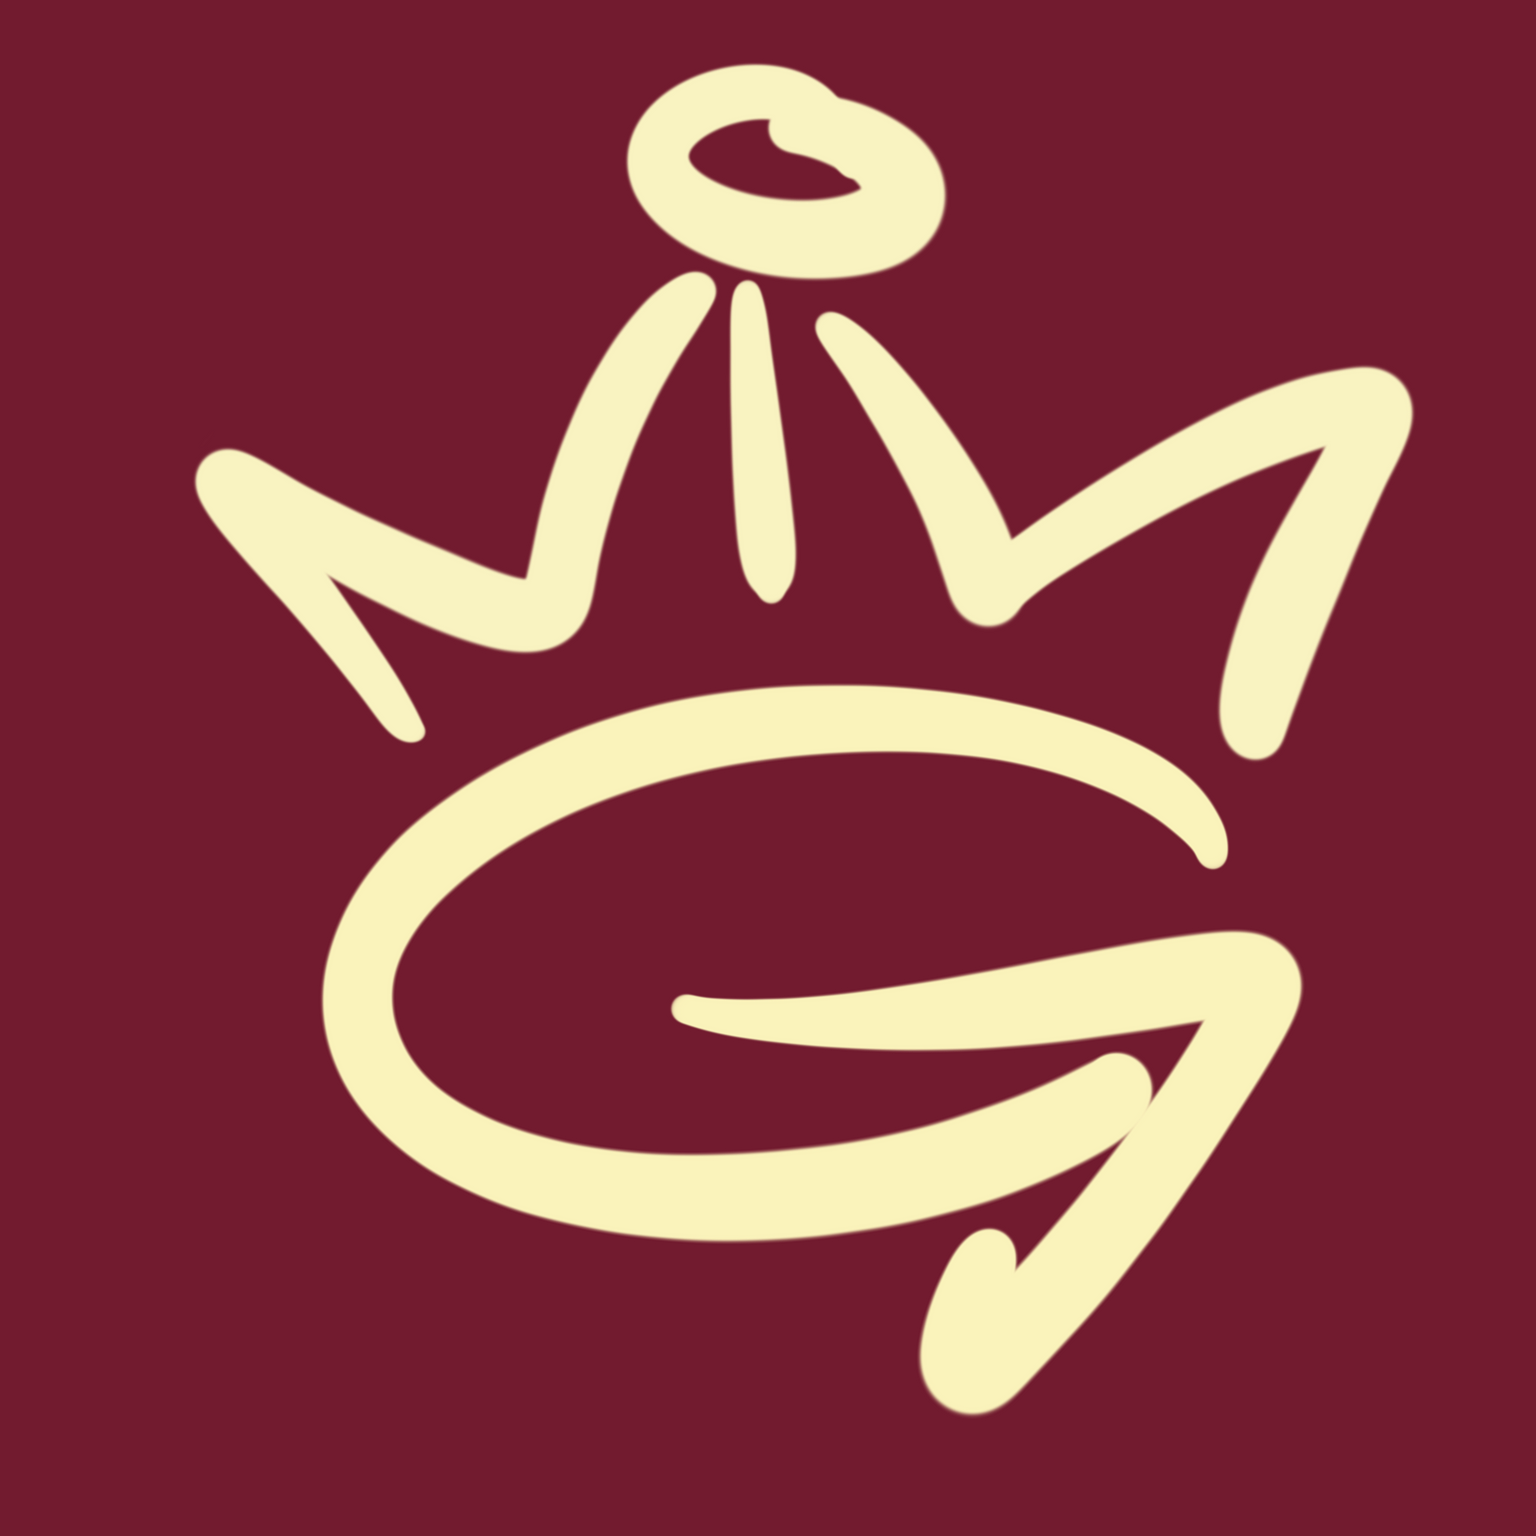 NING Logo version 4 with an arrow